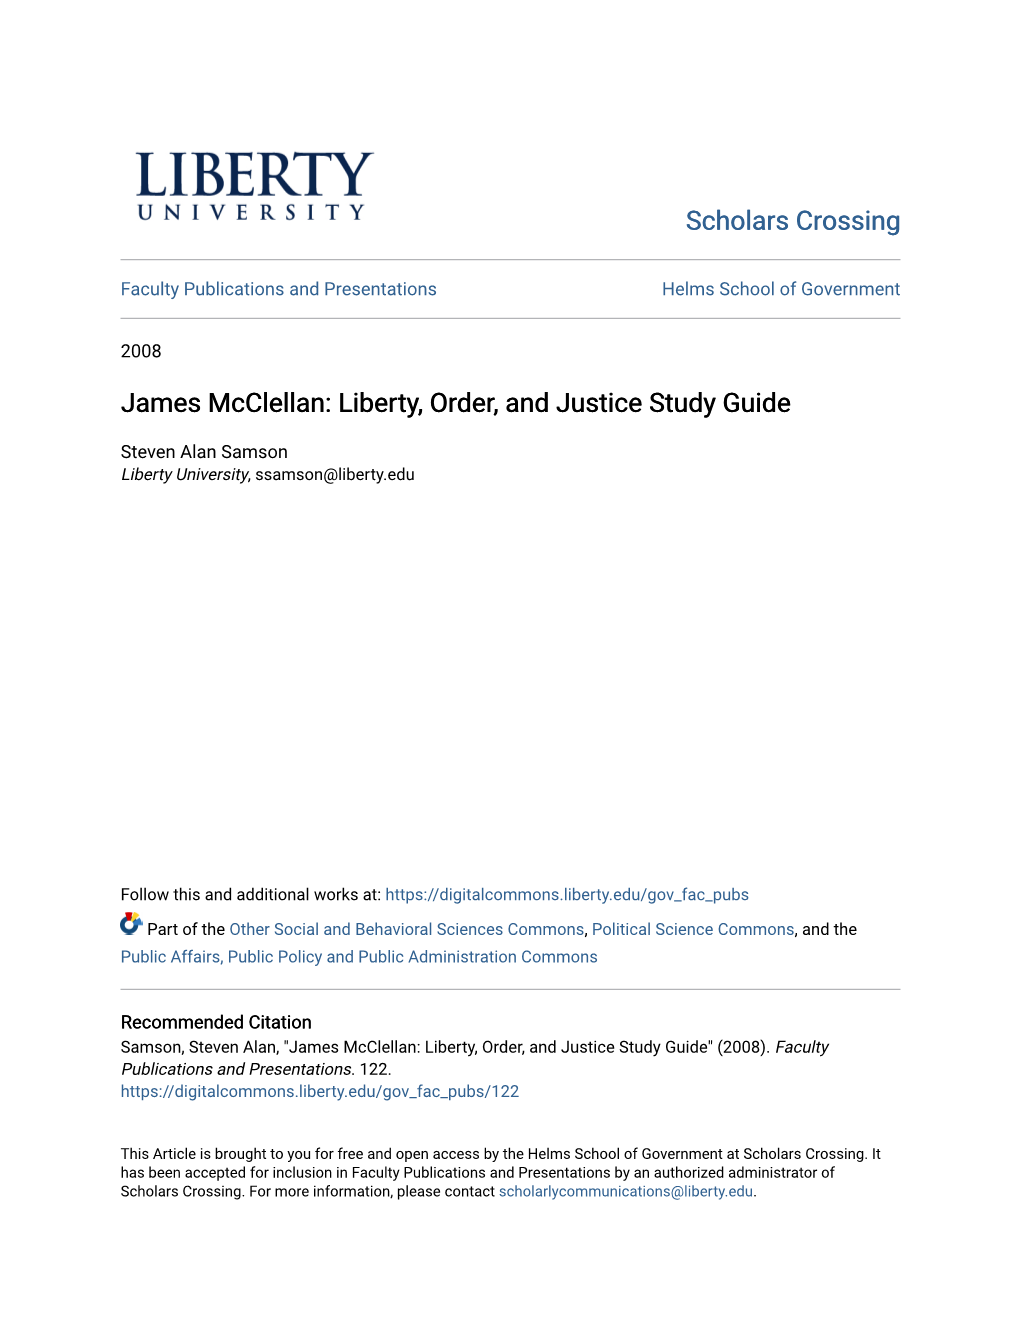 James Mcclellan: Liberty, Order, and Justice Study Guide